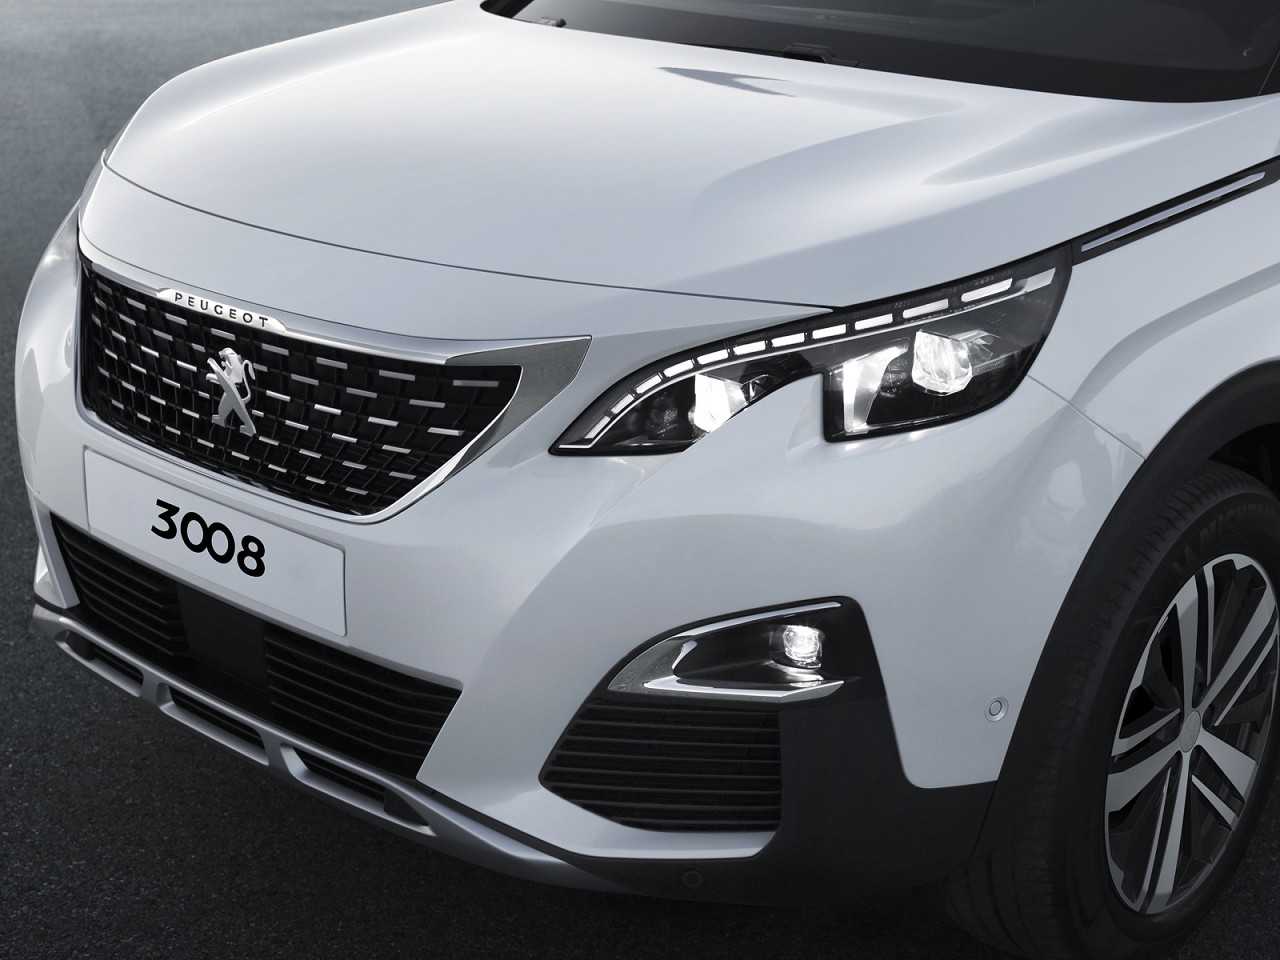 Peugeot3008 2018 - grade frontal